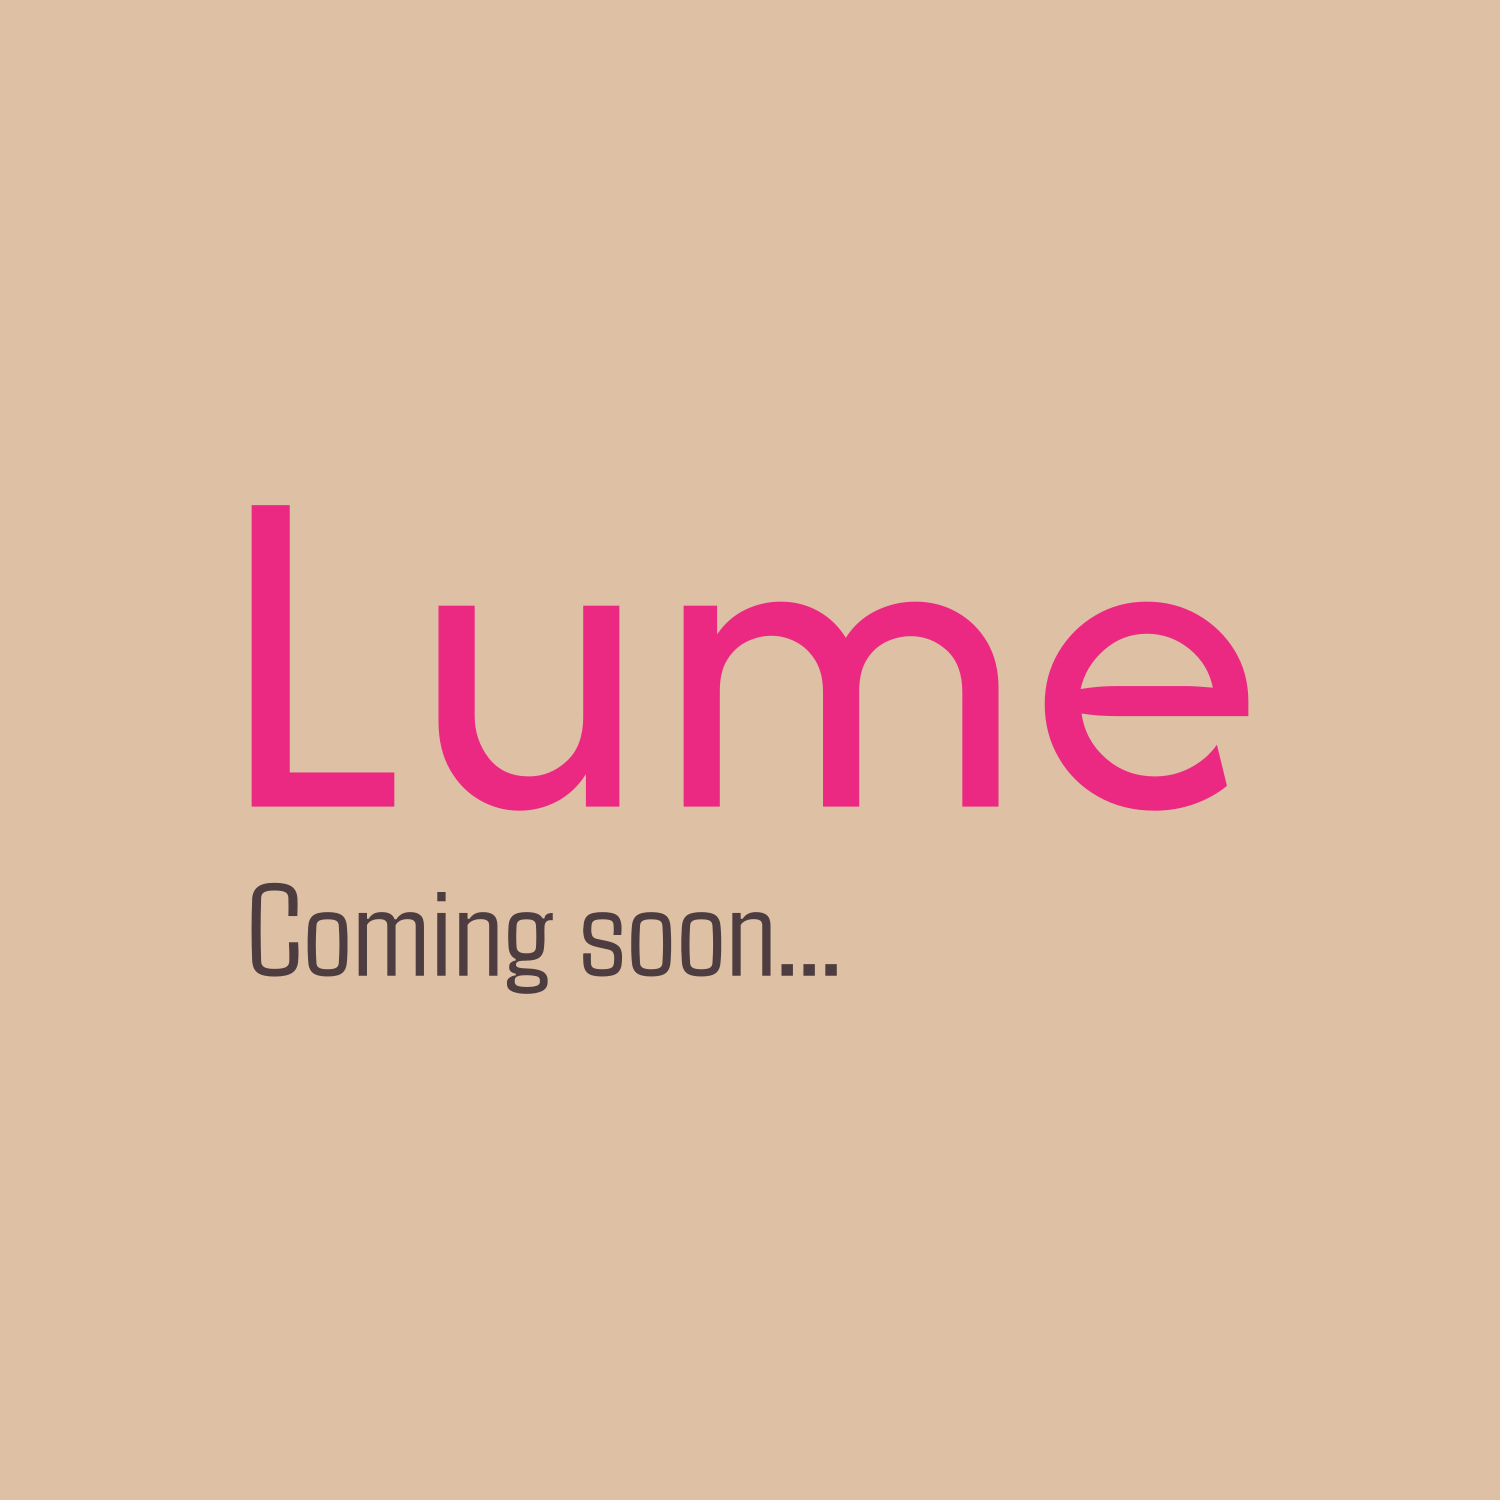 Lume - Coming soon...